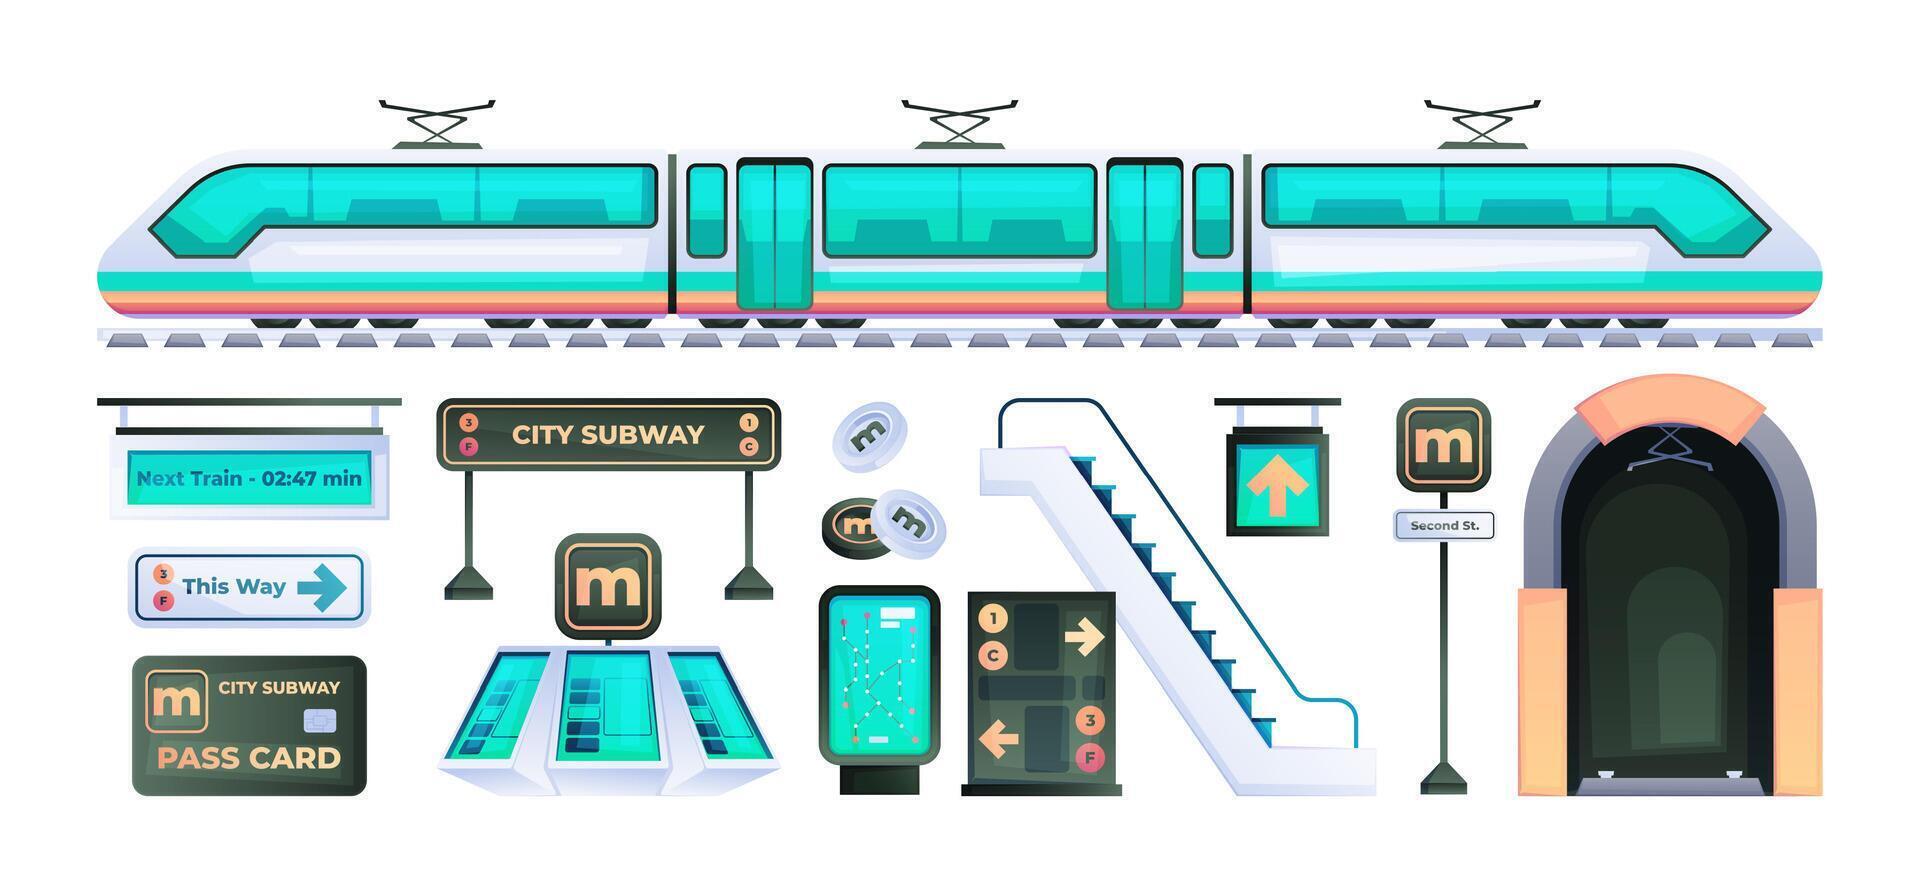 città la metropolitana elemento. metropolitana ferrovia trasporto infrastruttura, urbano metropolitana mezzi di trasporto sistema, carro piattaforma scala mobile tornello. vettore impostato